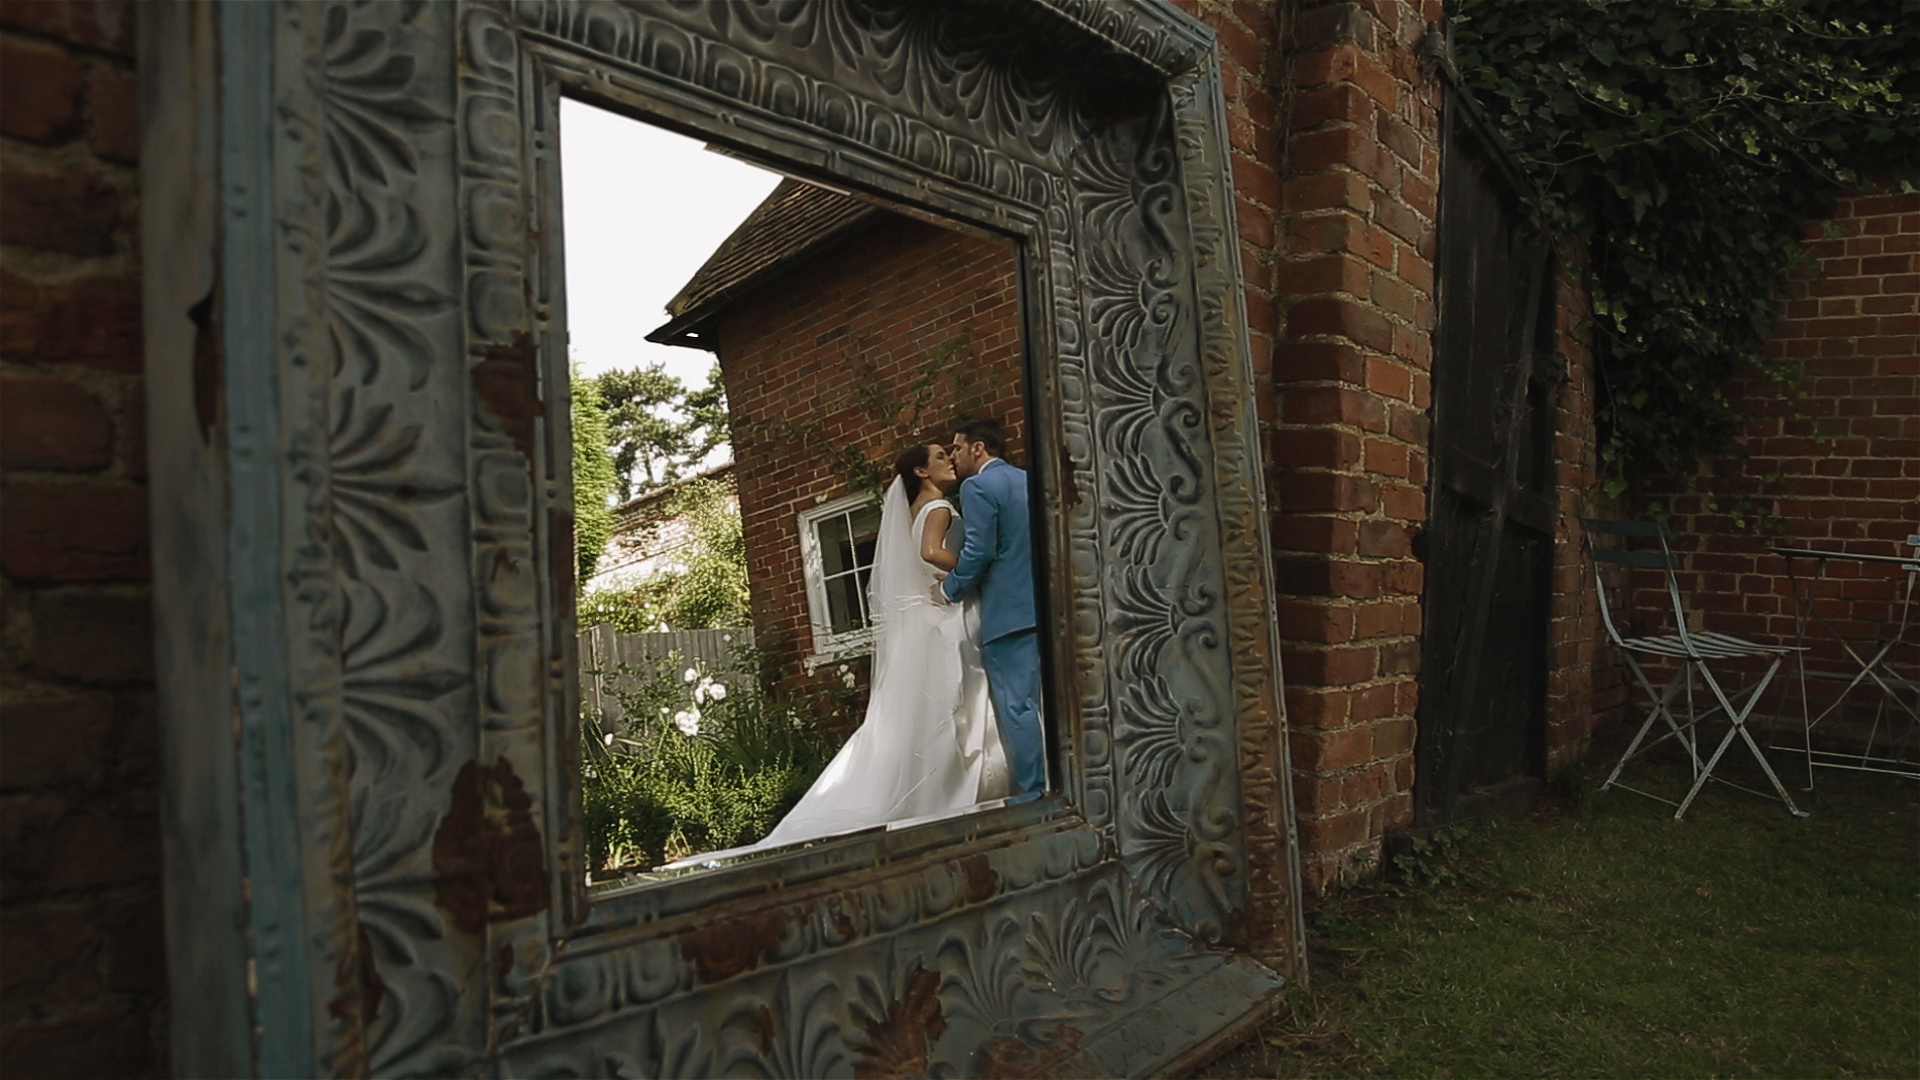 Wedding video from Gaynes Park, Essex